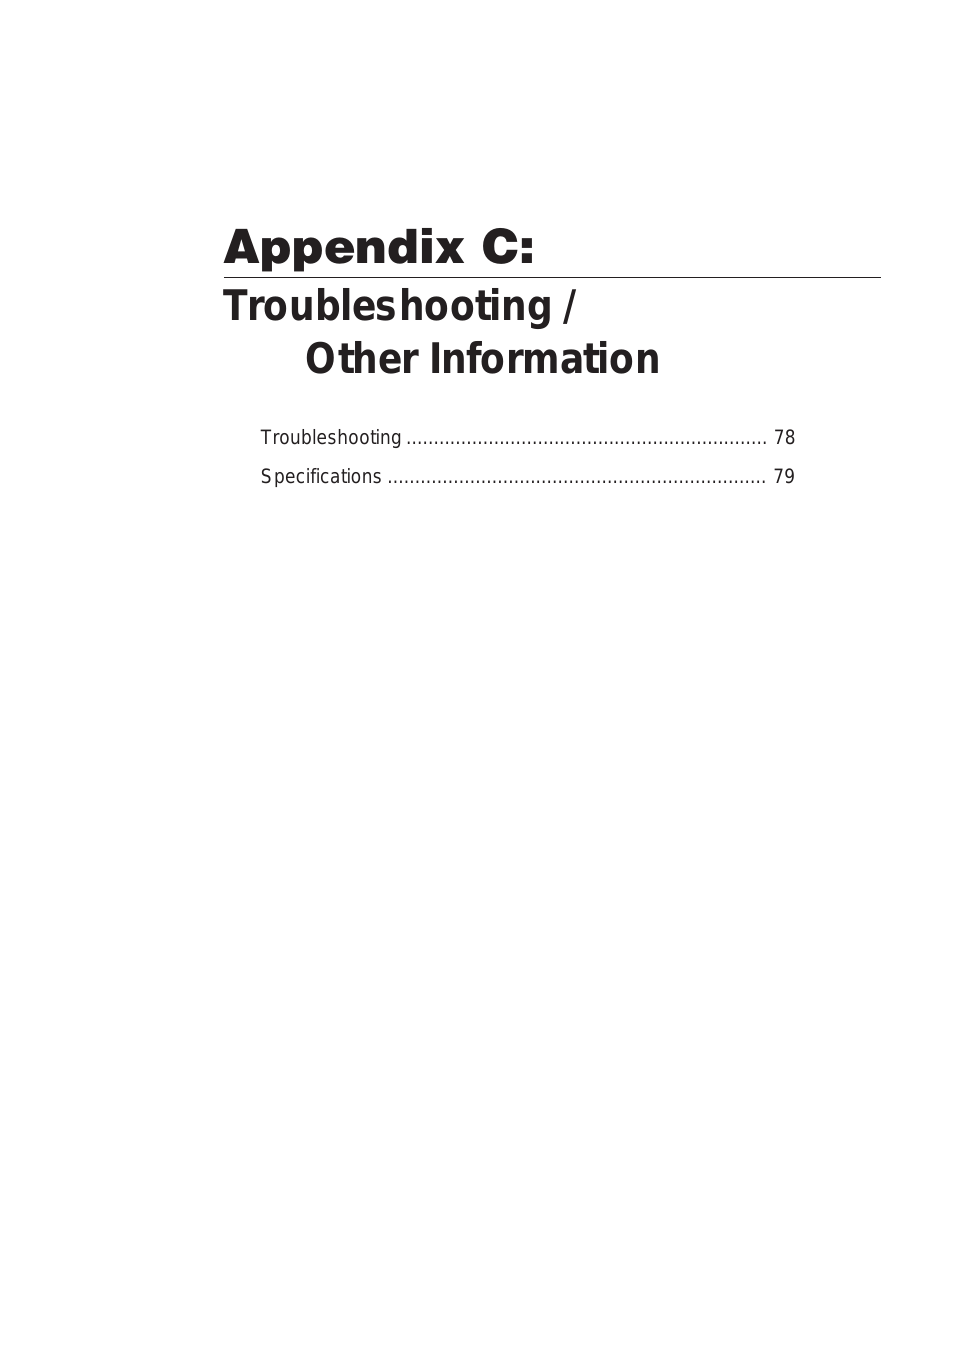 EA-100 Appendix